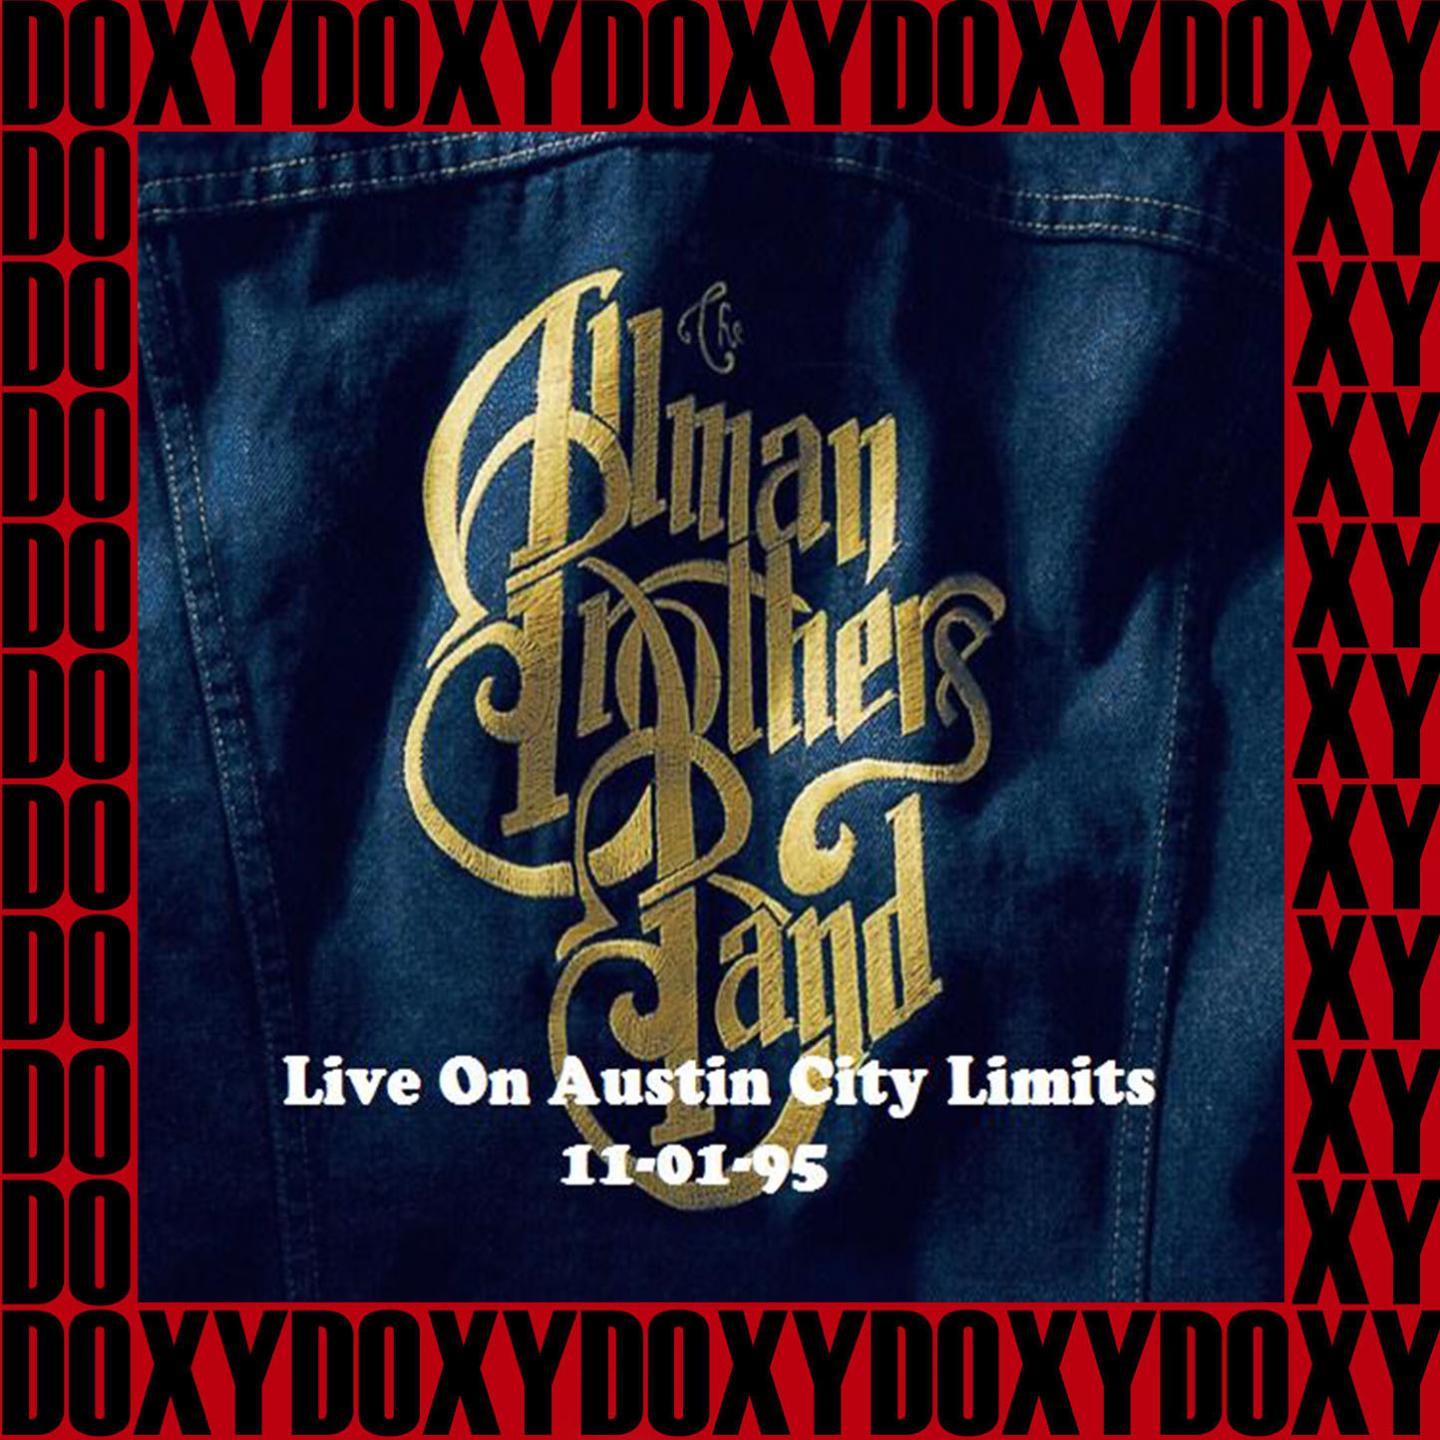 Austin City Limits, Austin, Tx. November 1st, 1995 (Doxy Collection, Remastered, Live on Fm Broadcasting)